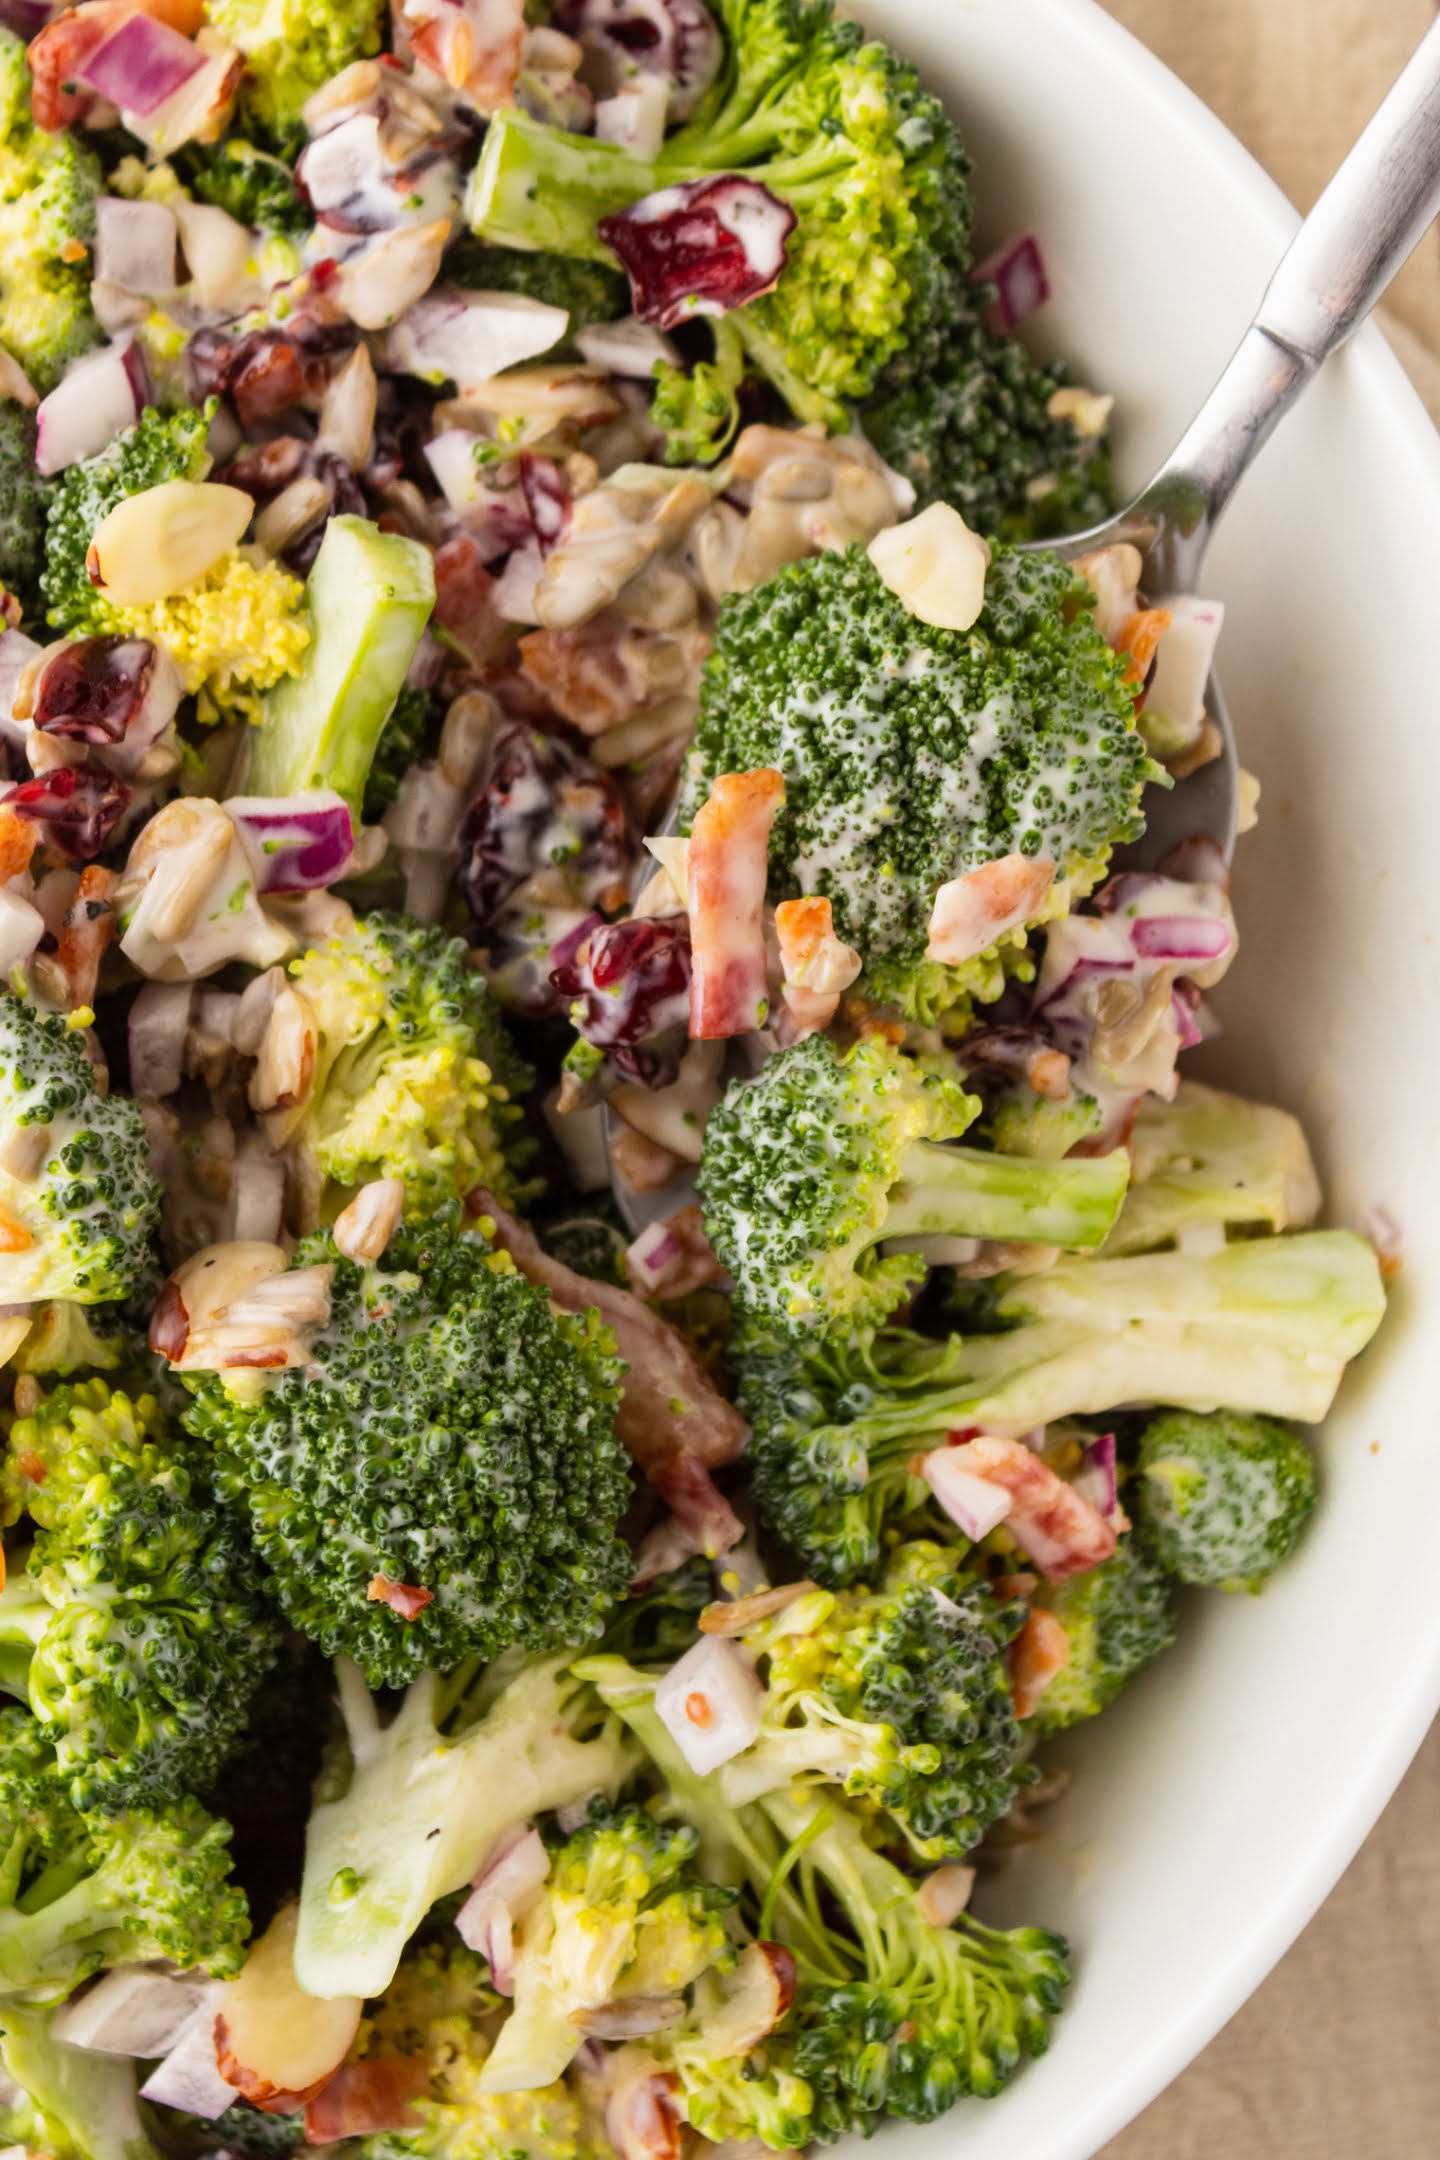 Broccoli salad variations